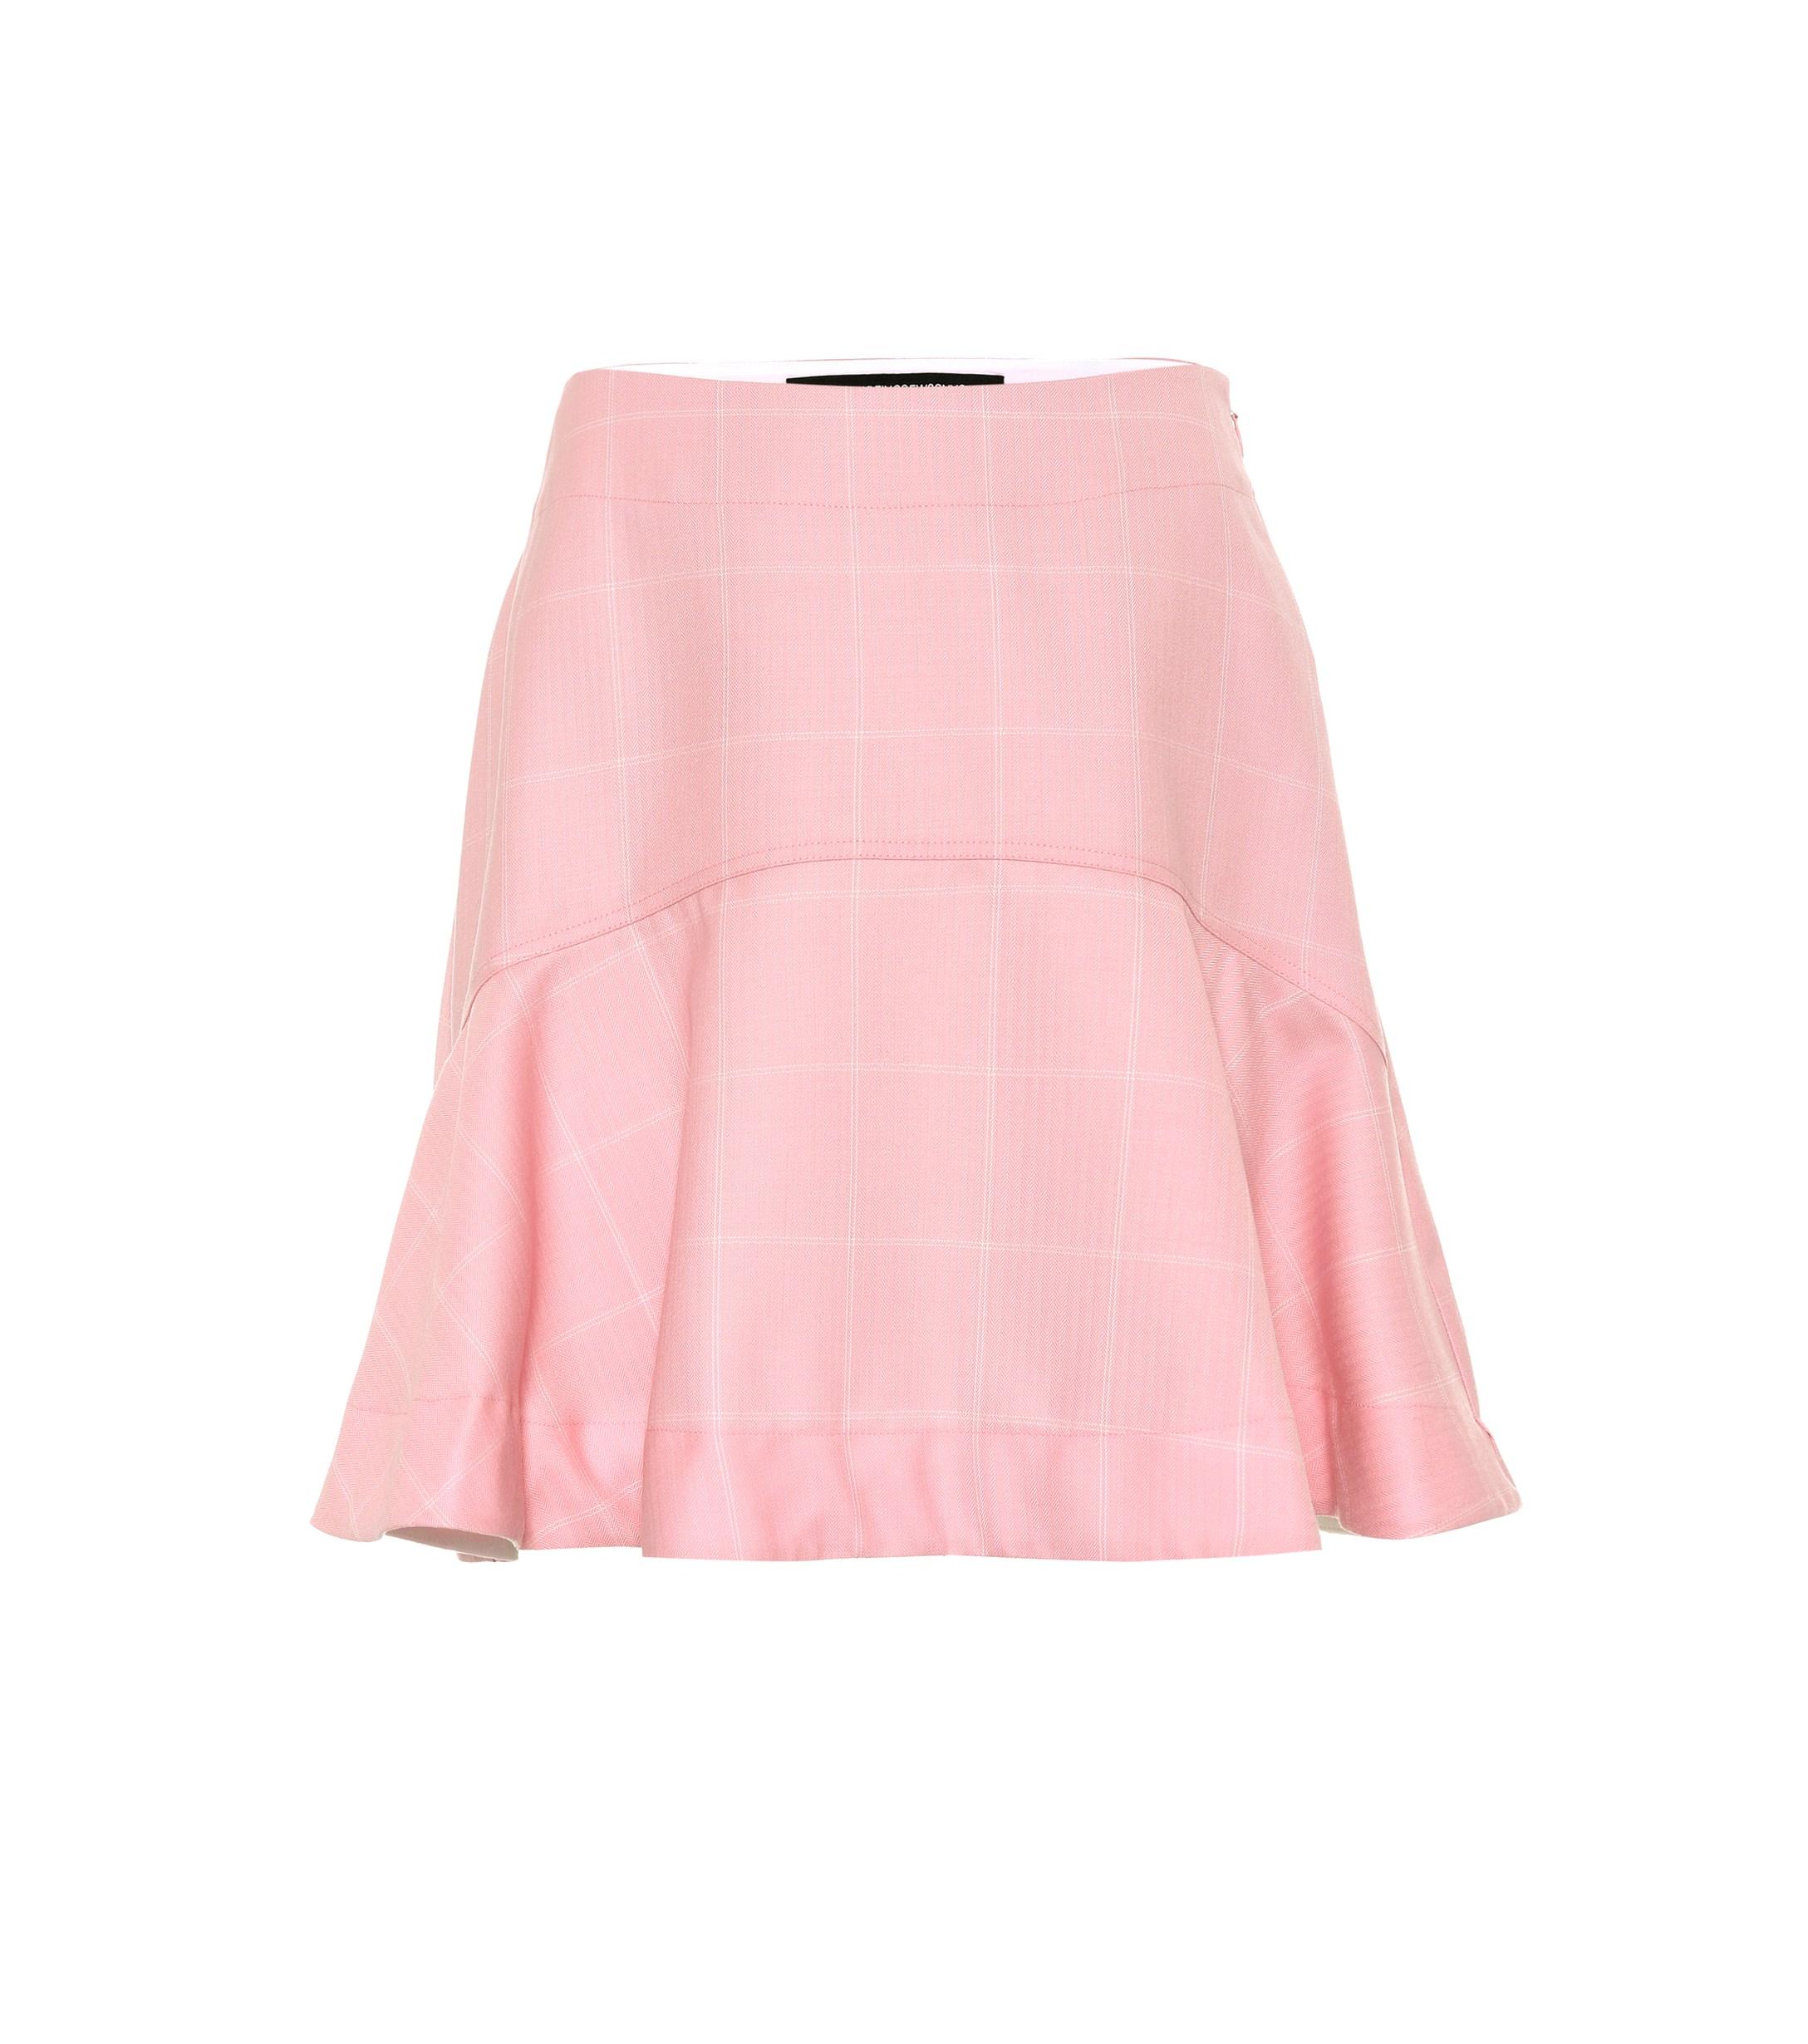 Lyst - CALVIN KLEIN 205W39NYC Checked Wool Miniskirt in Pink